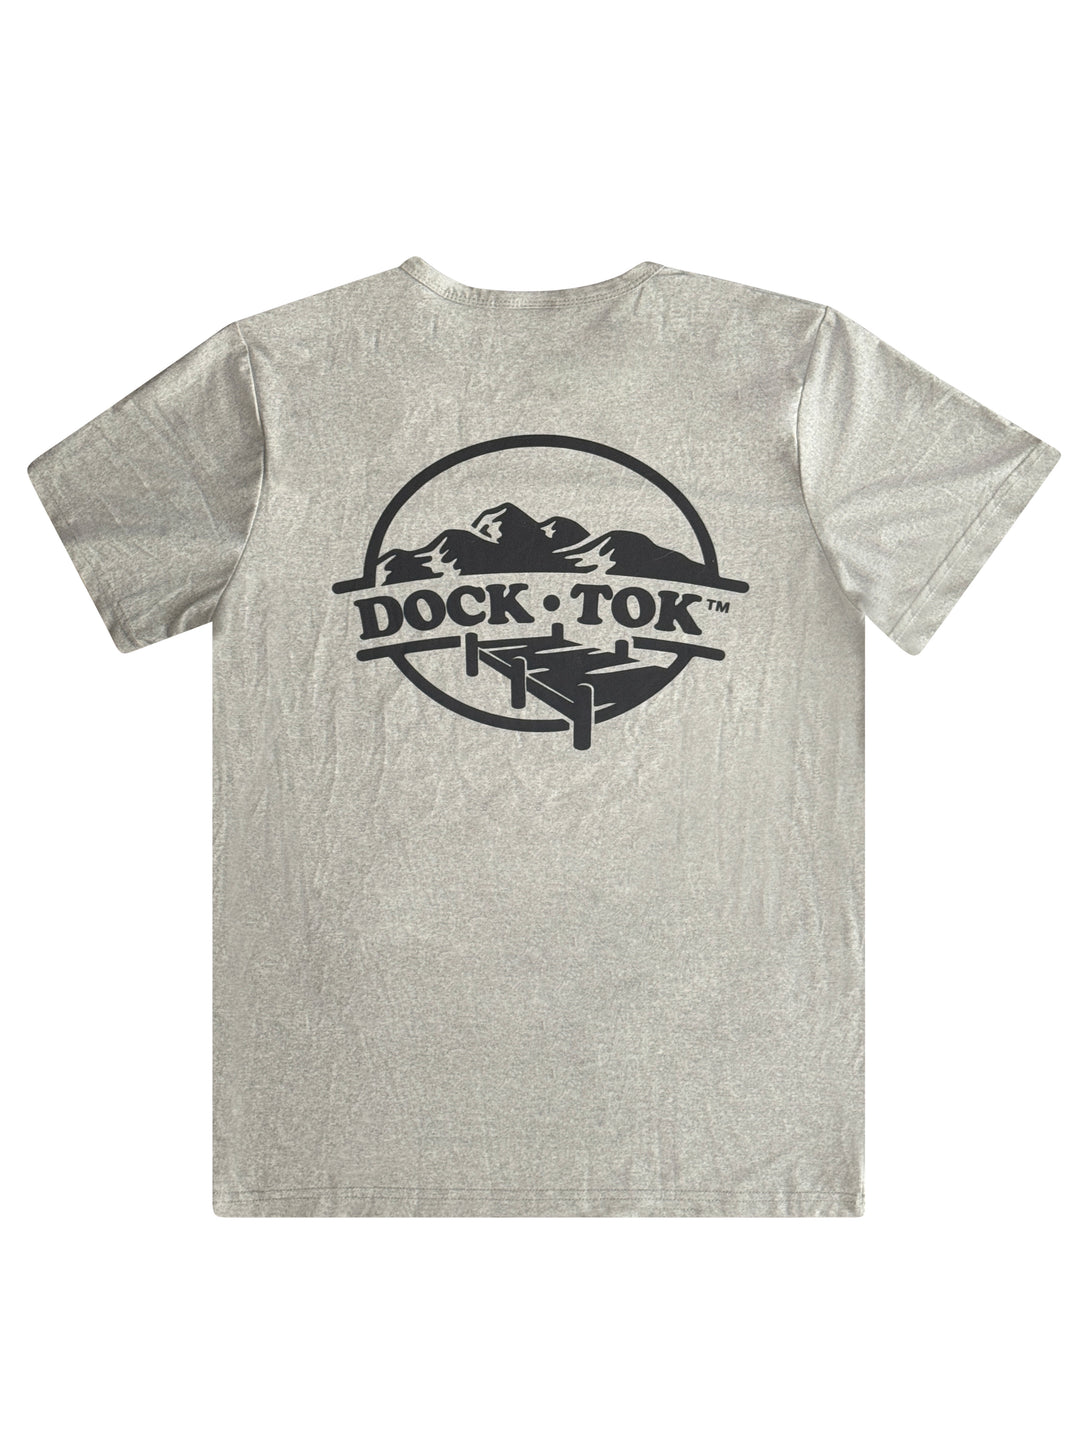 Dock Tok Polyester Shirt